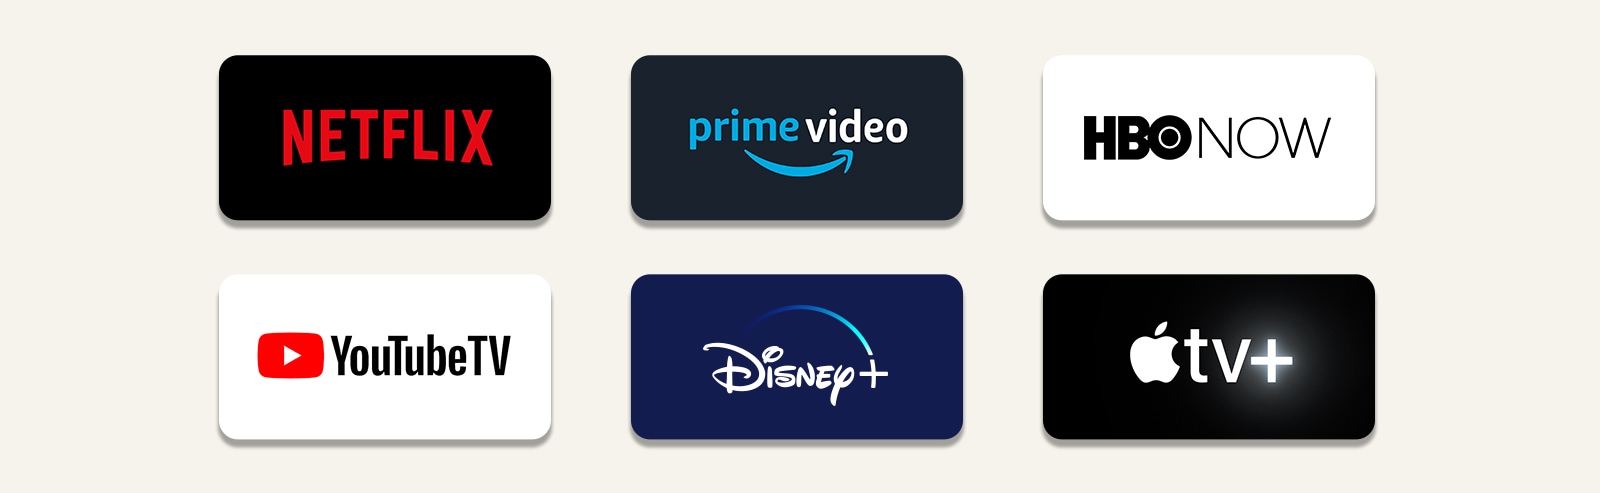 OTT 串流服務圖示排成一列。從左上開始：Netflix、Amazon Prime Video、HBO NOW、YouTubeTV、Disney+。及 Apple TV+。